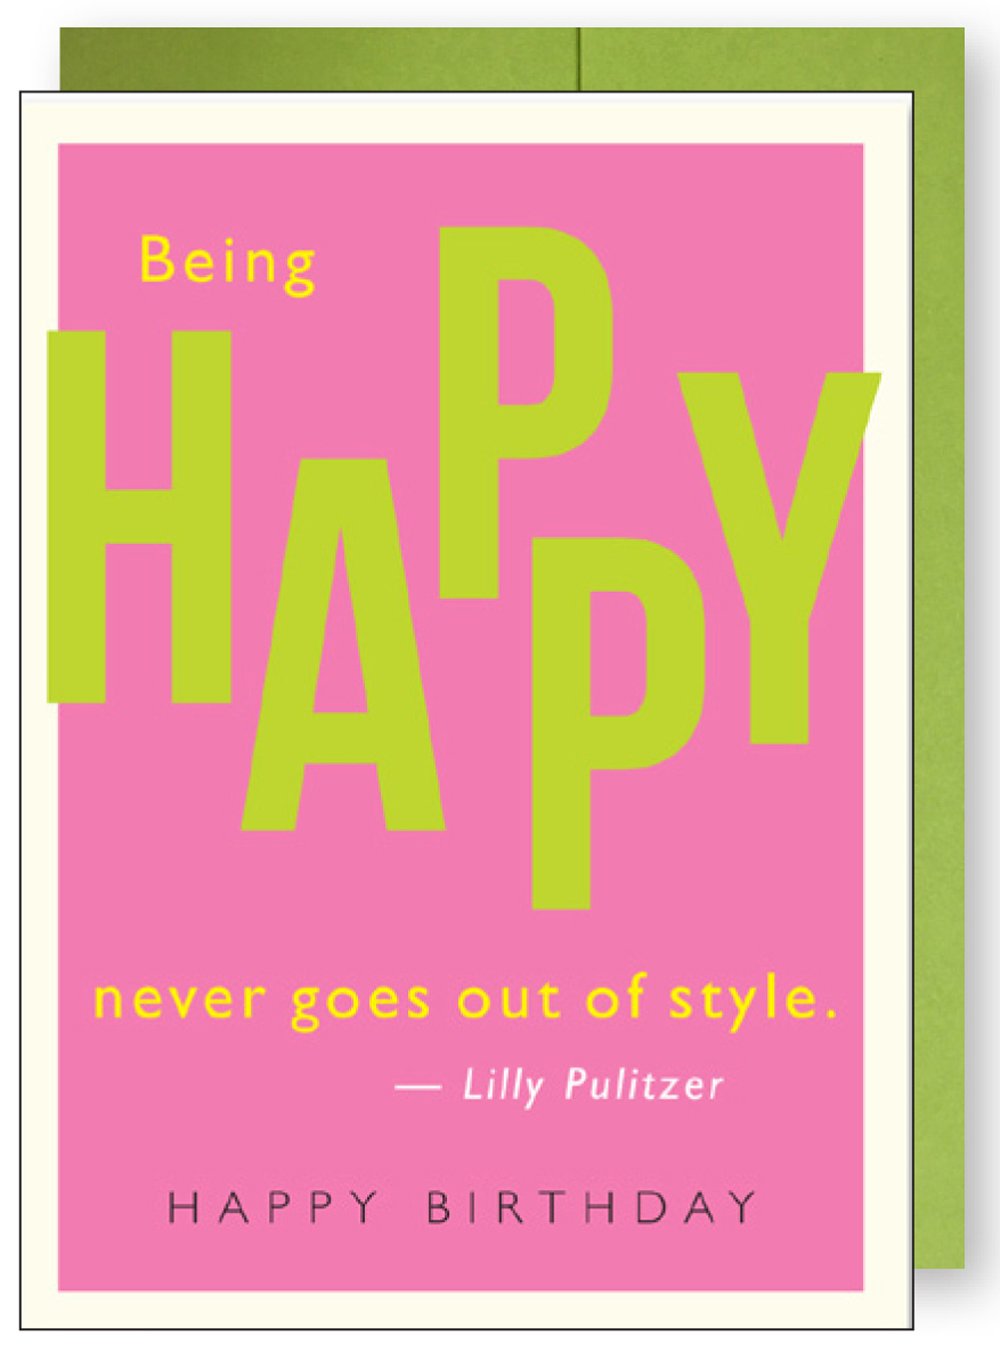 Lilly Pulitzer Happy Birthday Greeting Card